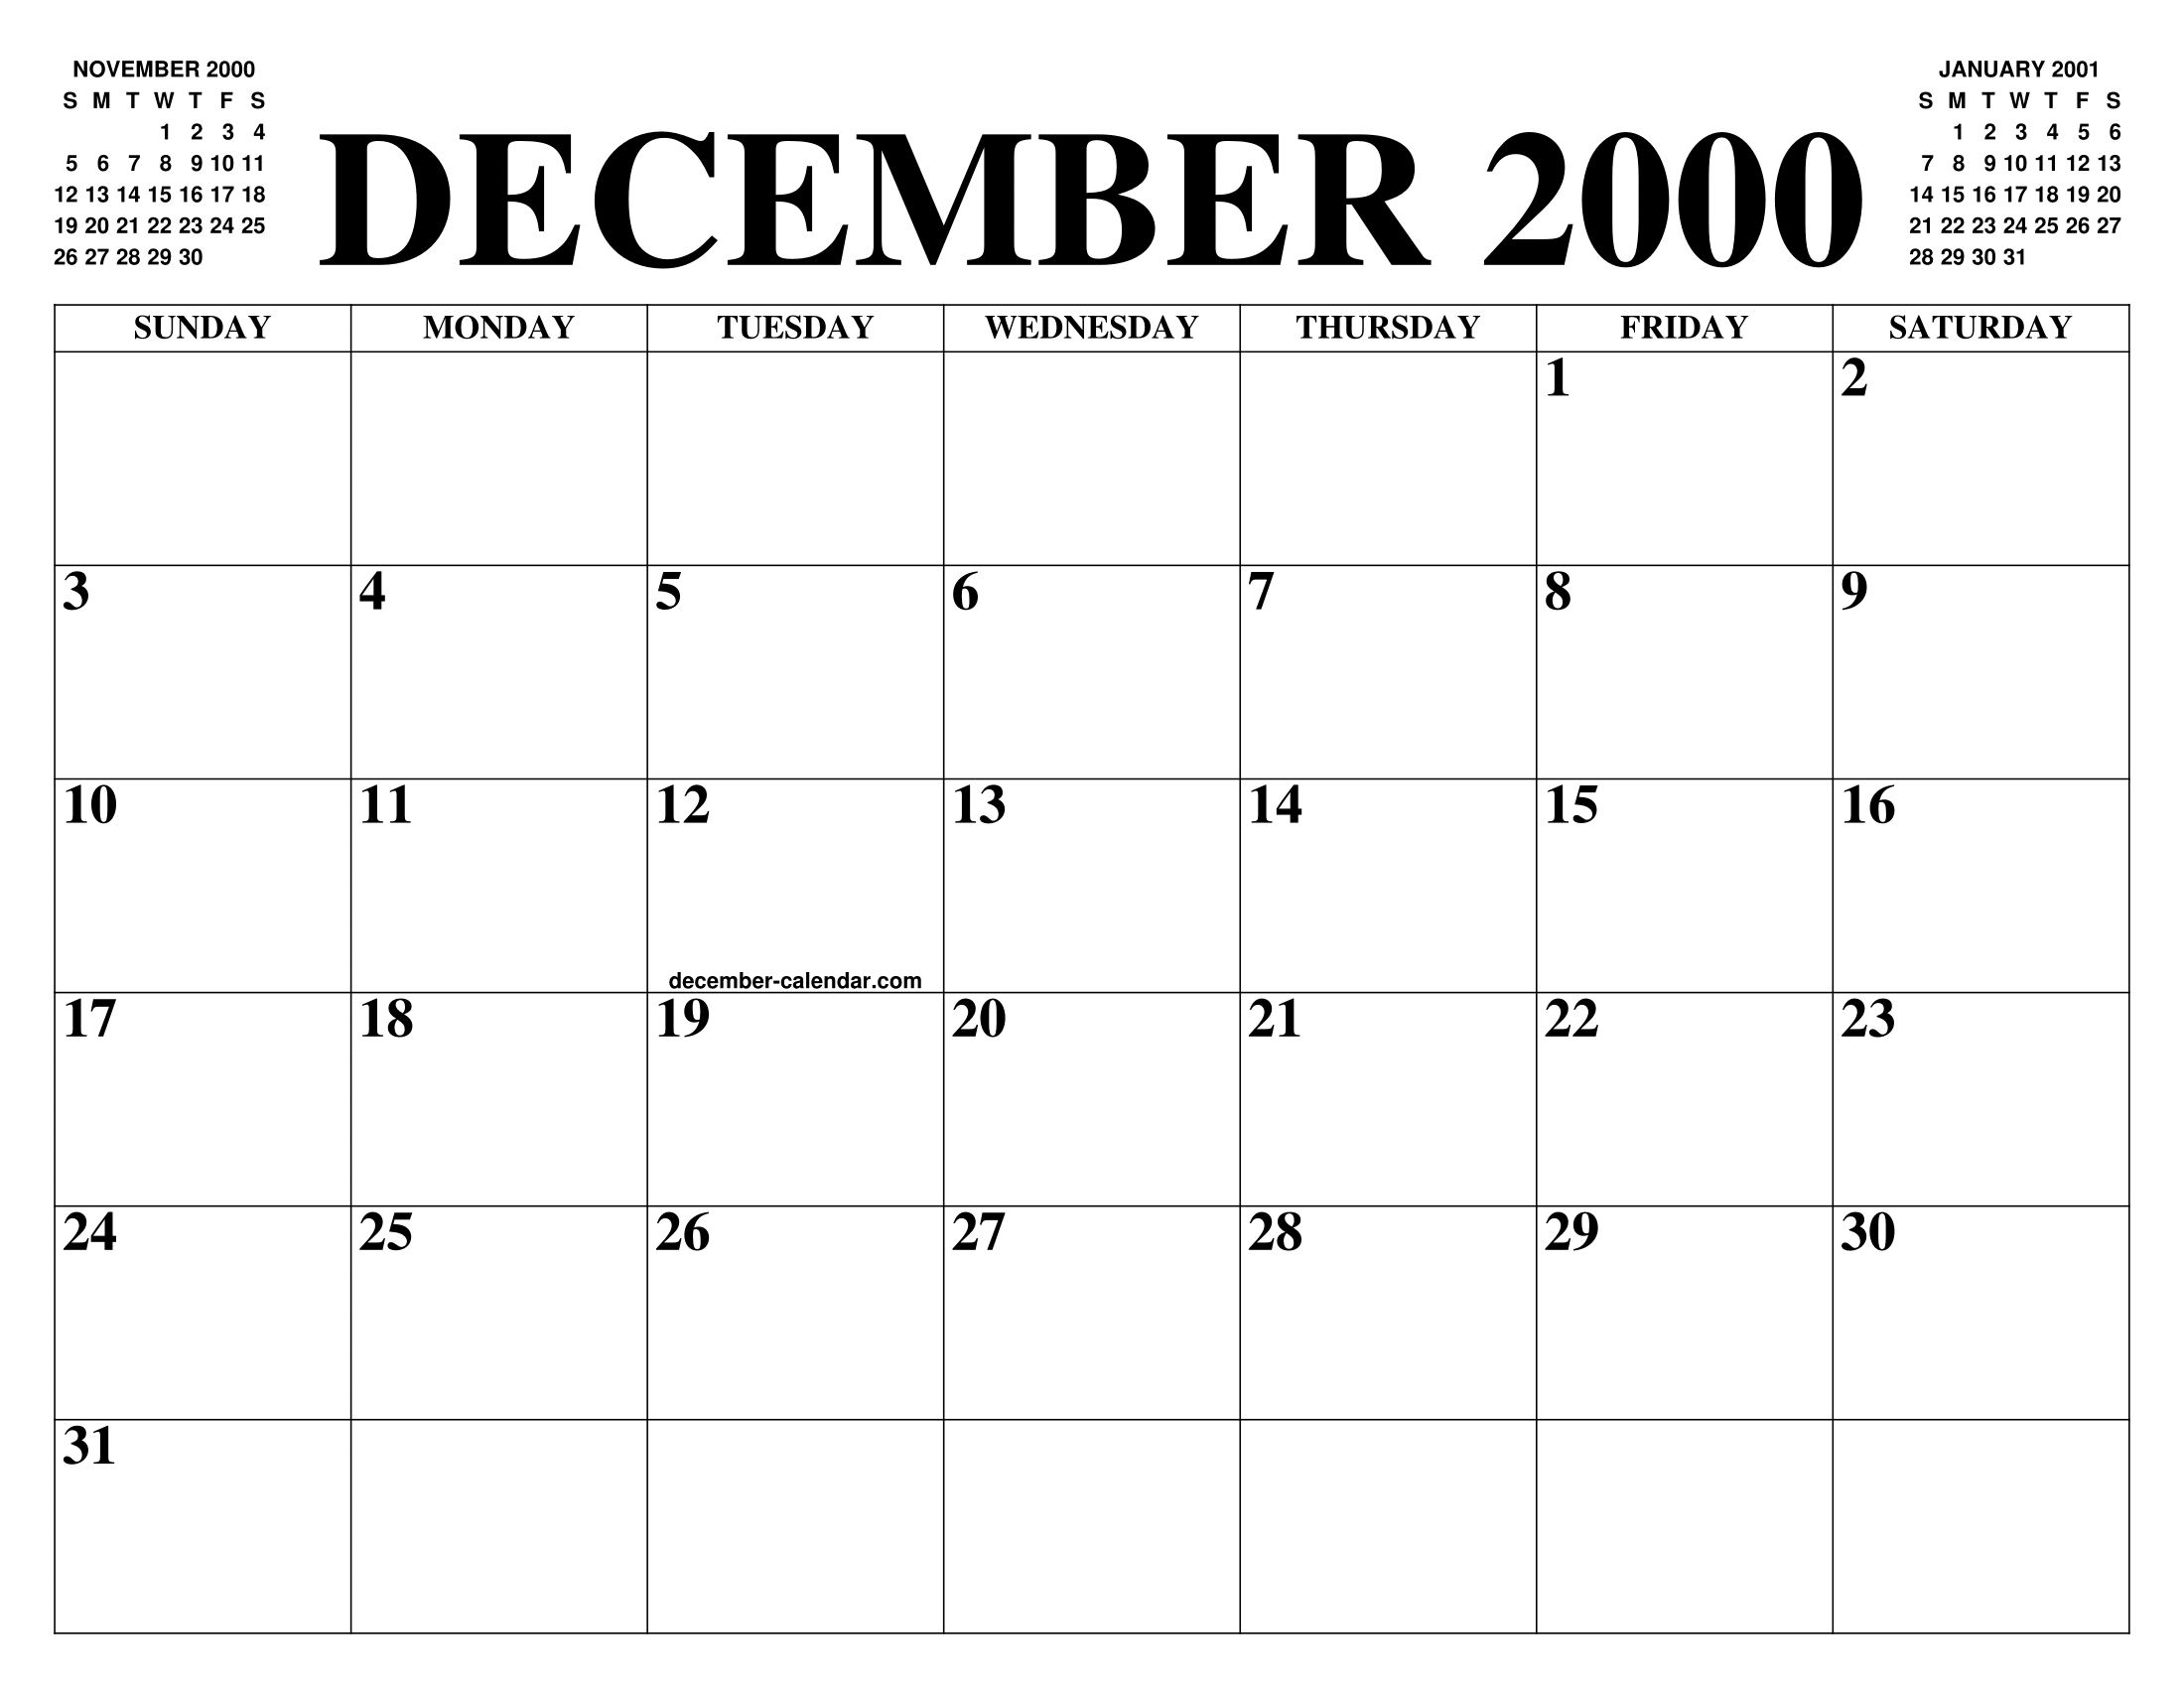 DECEMBER 2000 CALENDAR OF THE MONTH: FREE PRINTABLE DECEMBER CALENDAR